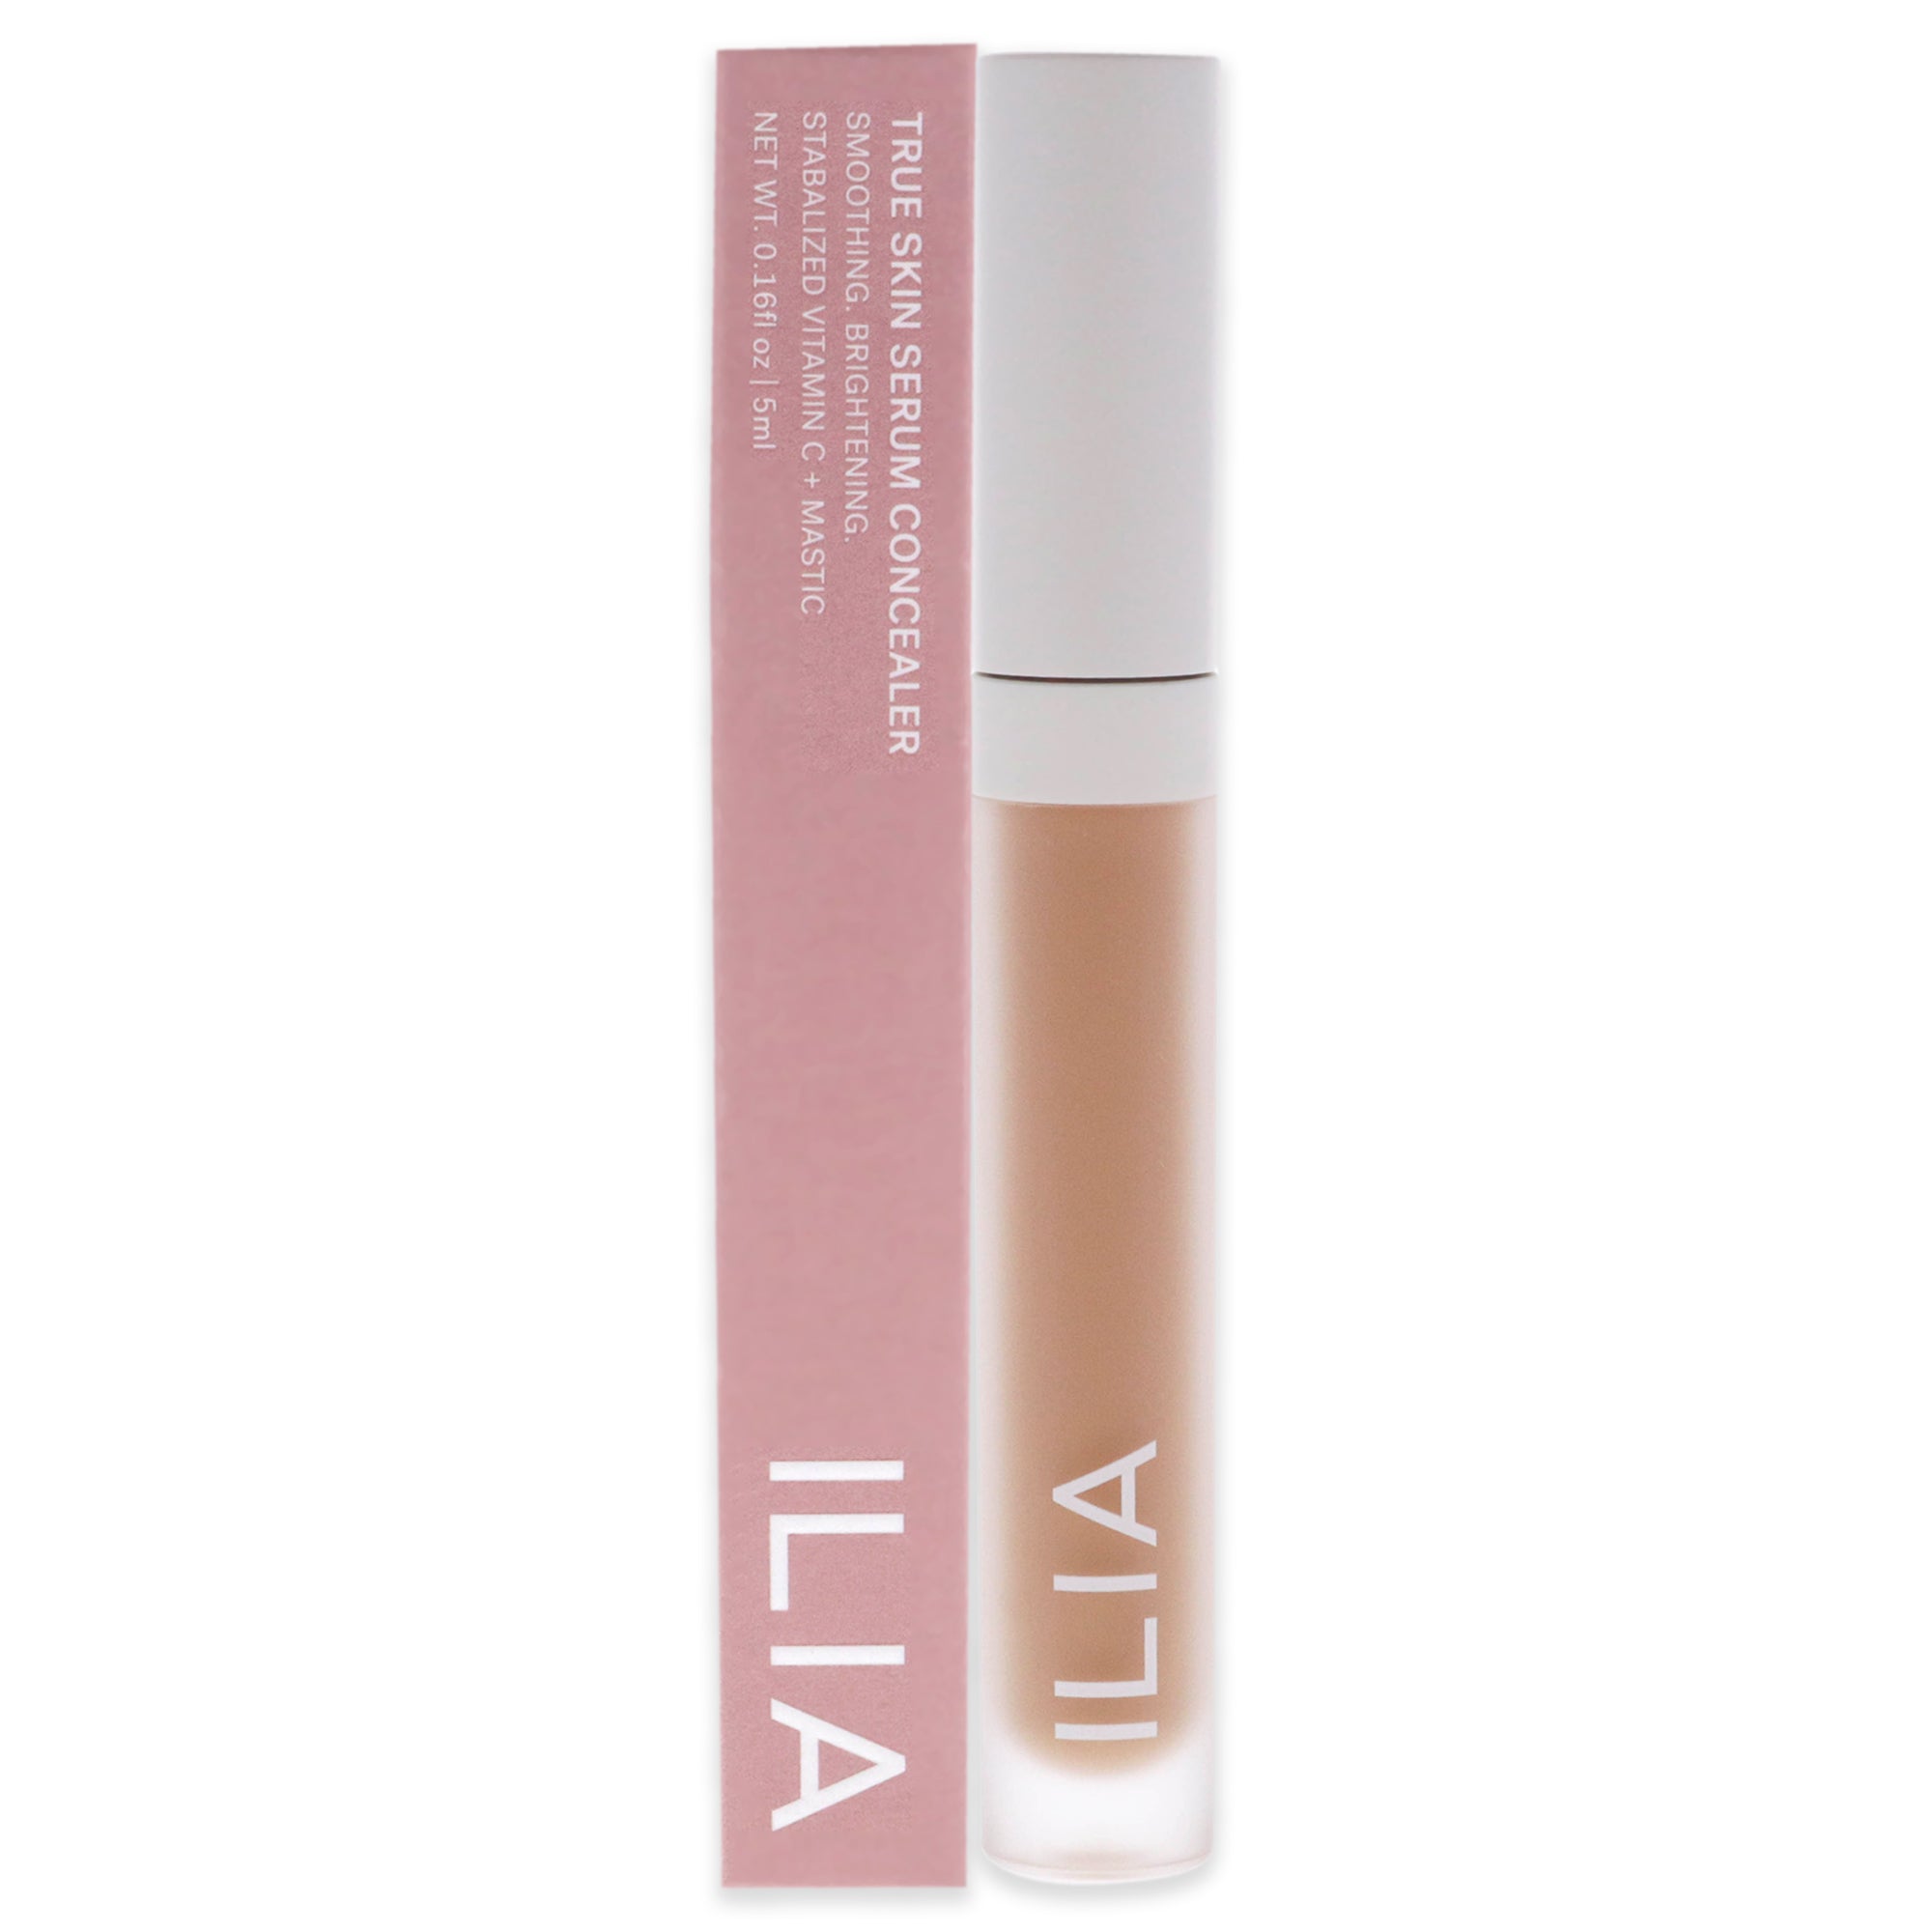 True Skin Serum Concealer - SC4 Nutmeg by ILIA Beauty for Women - 0.16 oz Concealer